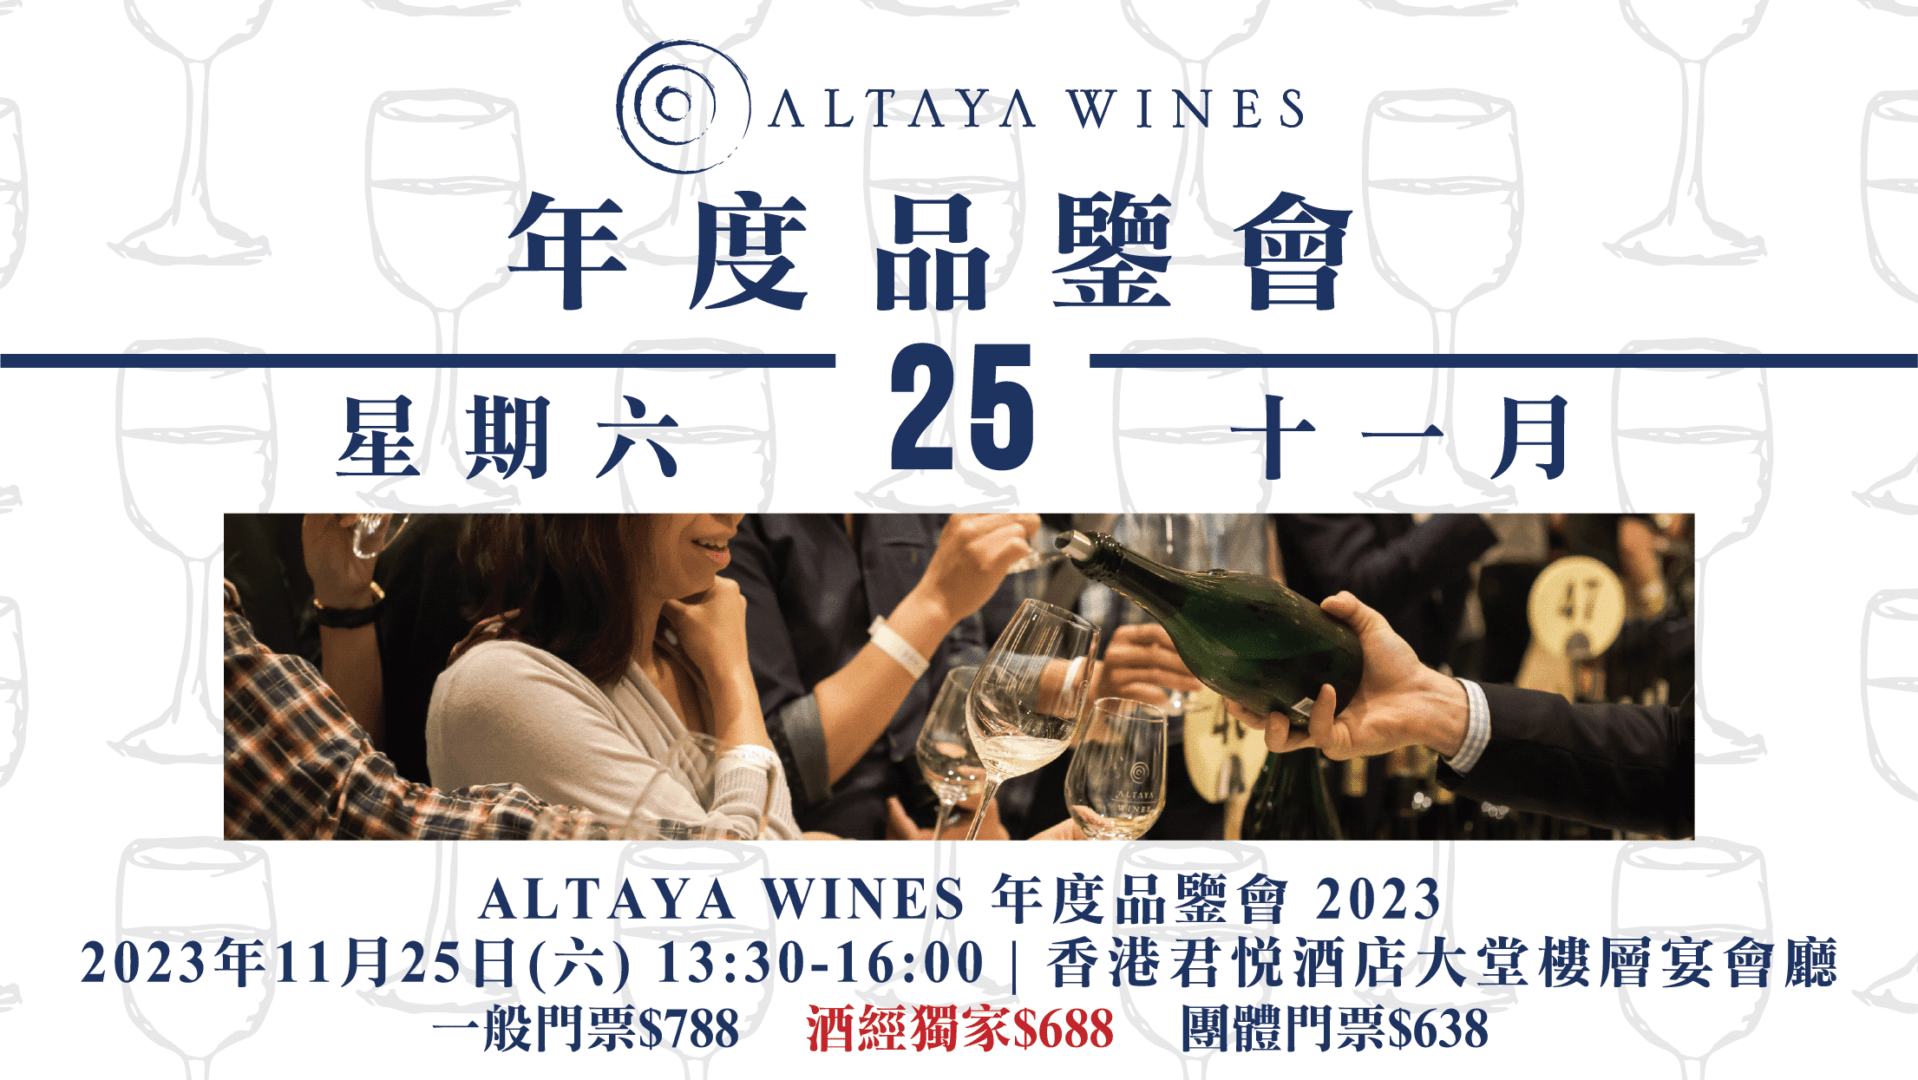 Altaya Wines 年度品鑒會 2023 - WineNow